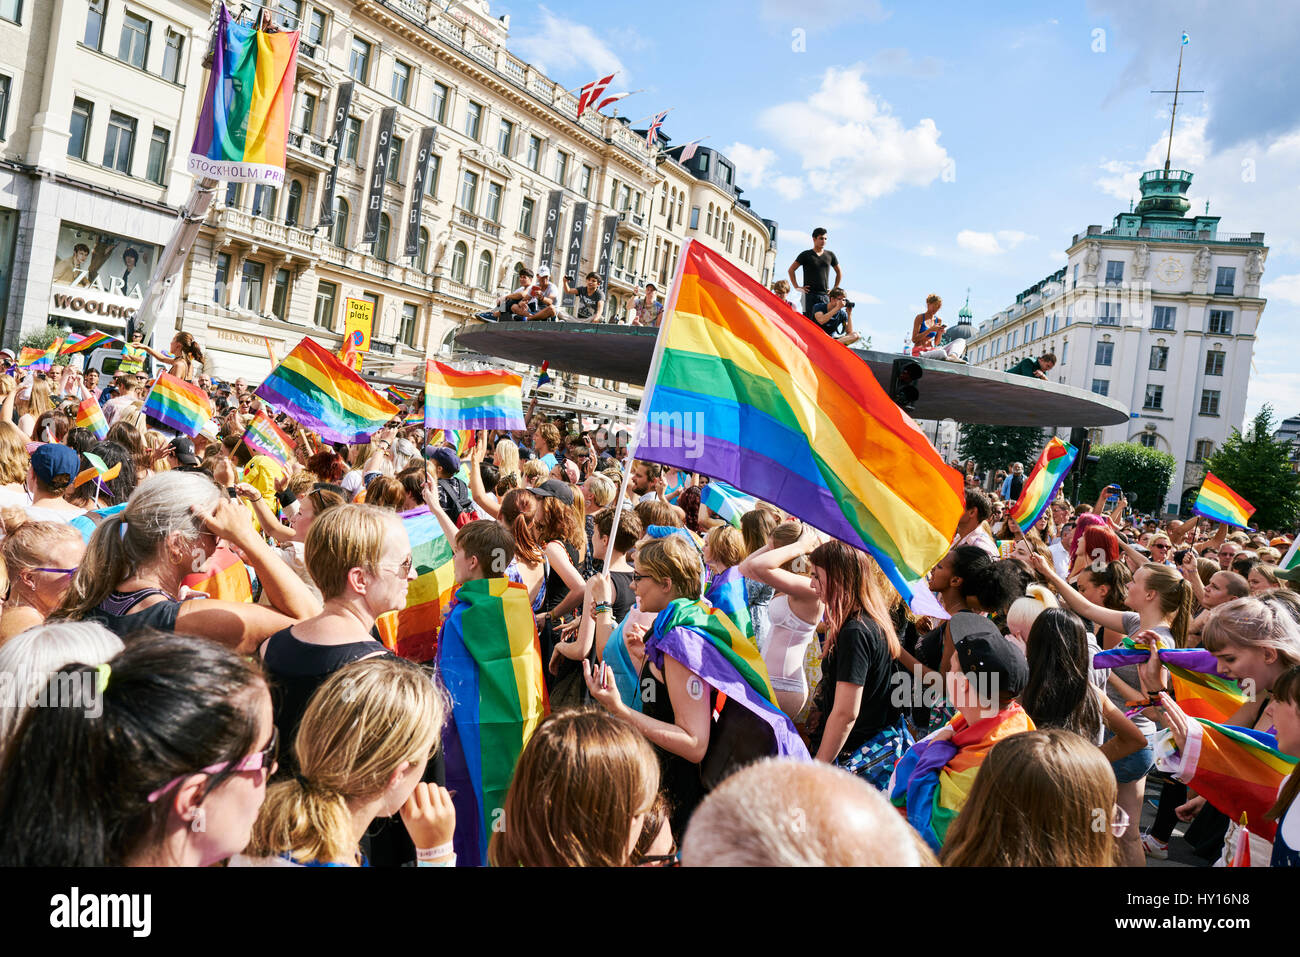 Sweden, Uppland, Stockholm, Ostermalm, Stureplan, Crowd at gay pride parade Stock Photo